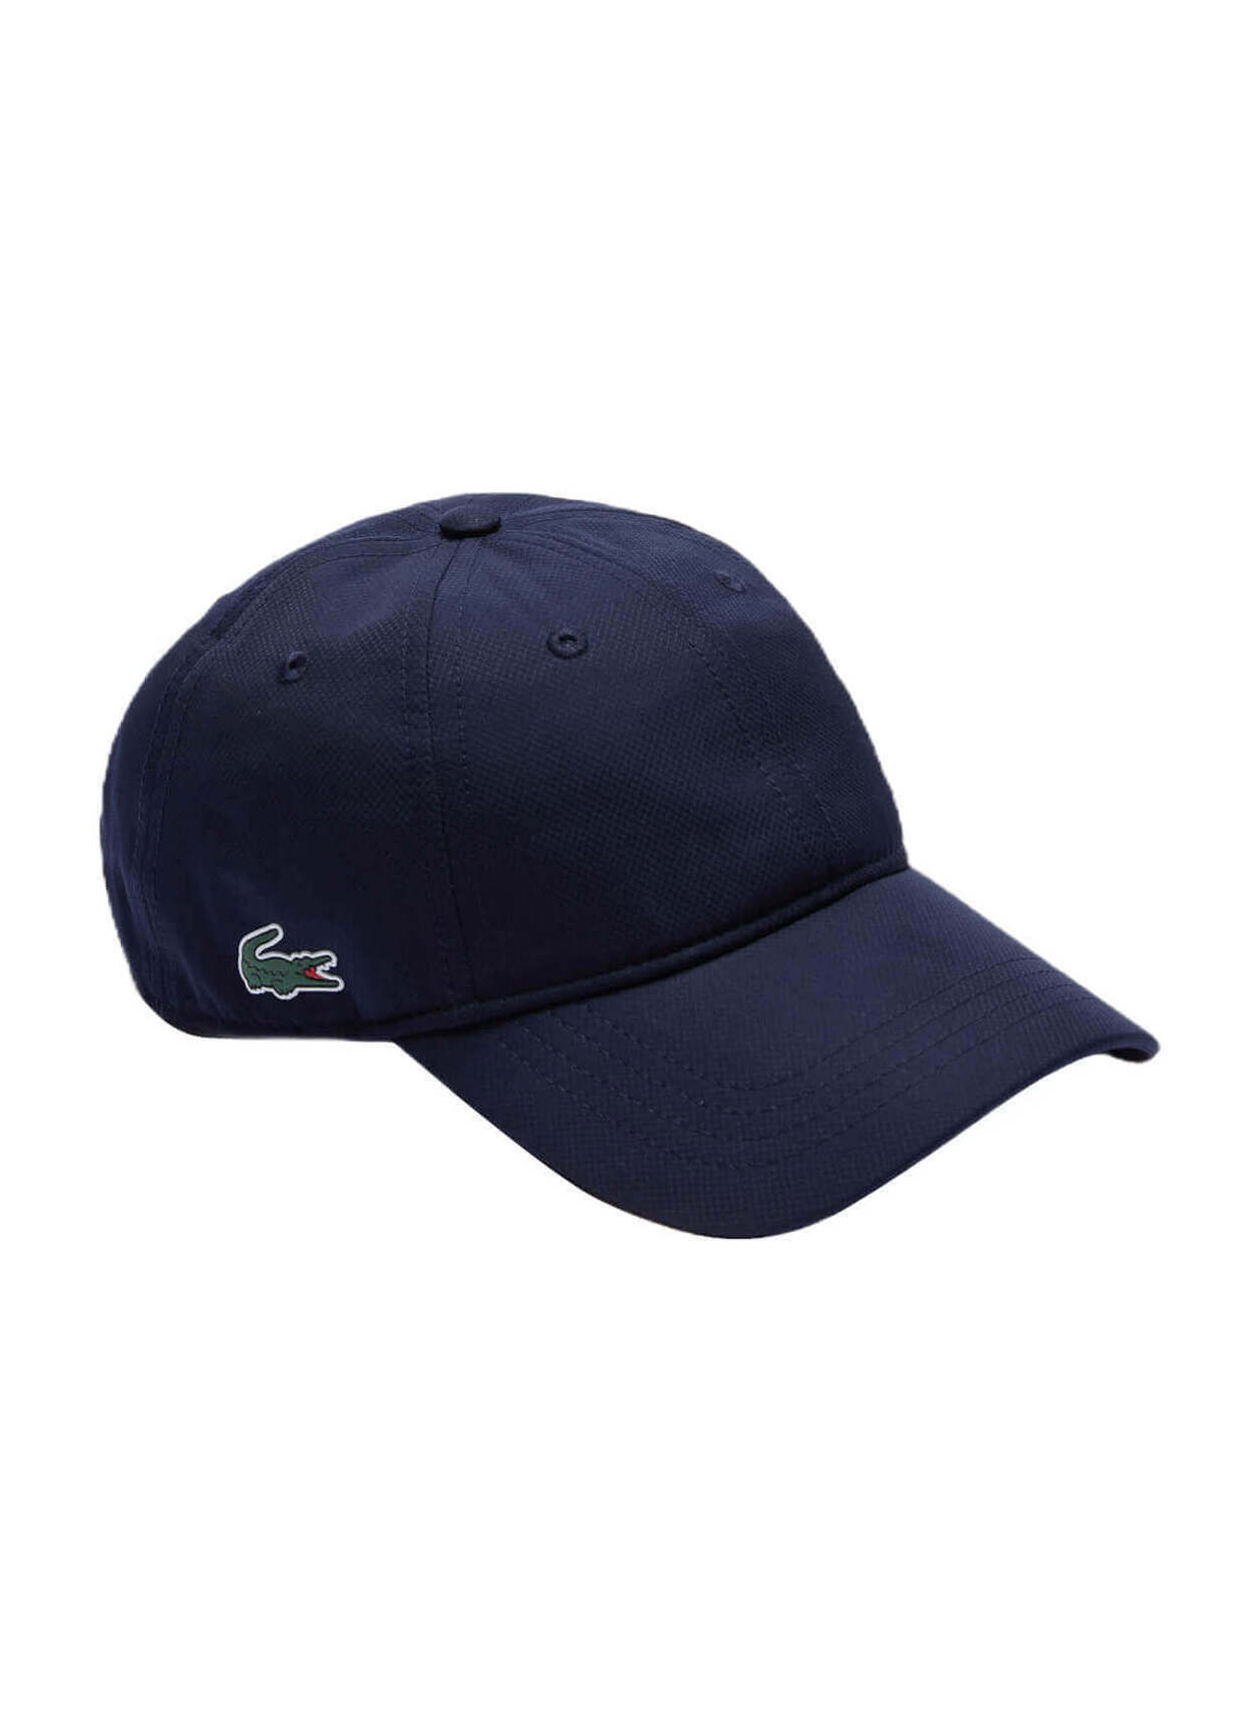 Lacoste Navy Blue Men's SPORT Lightweight Hat